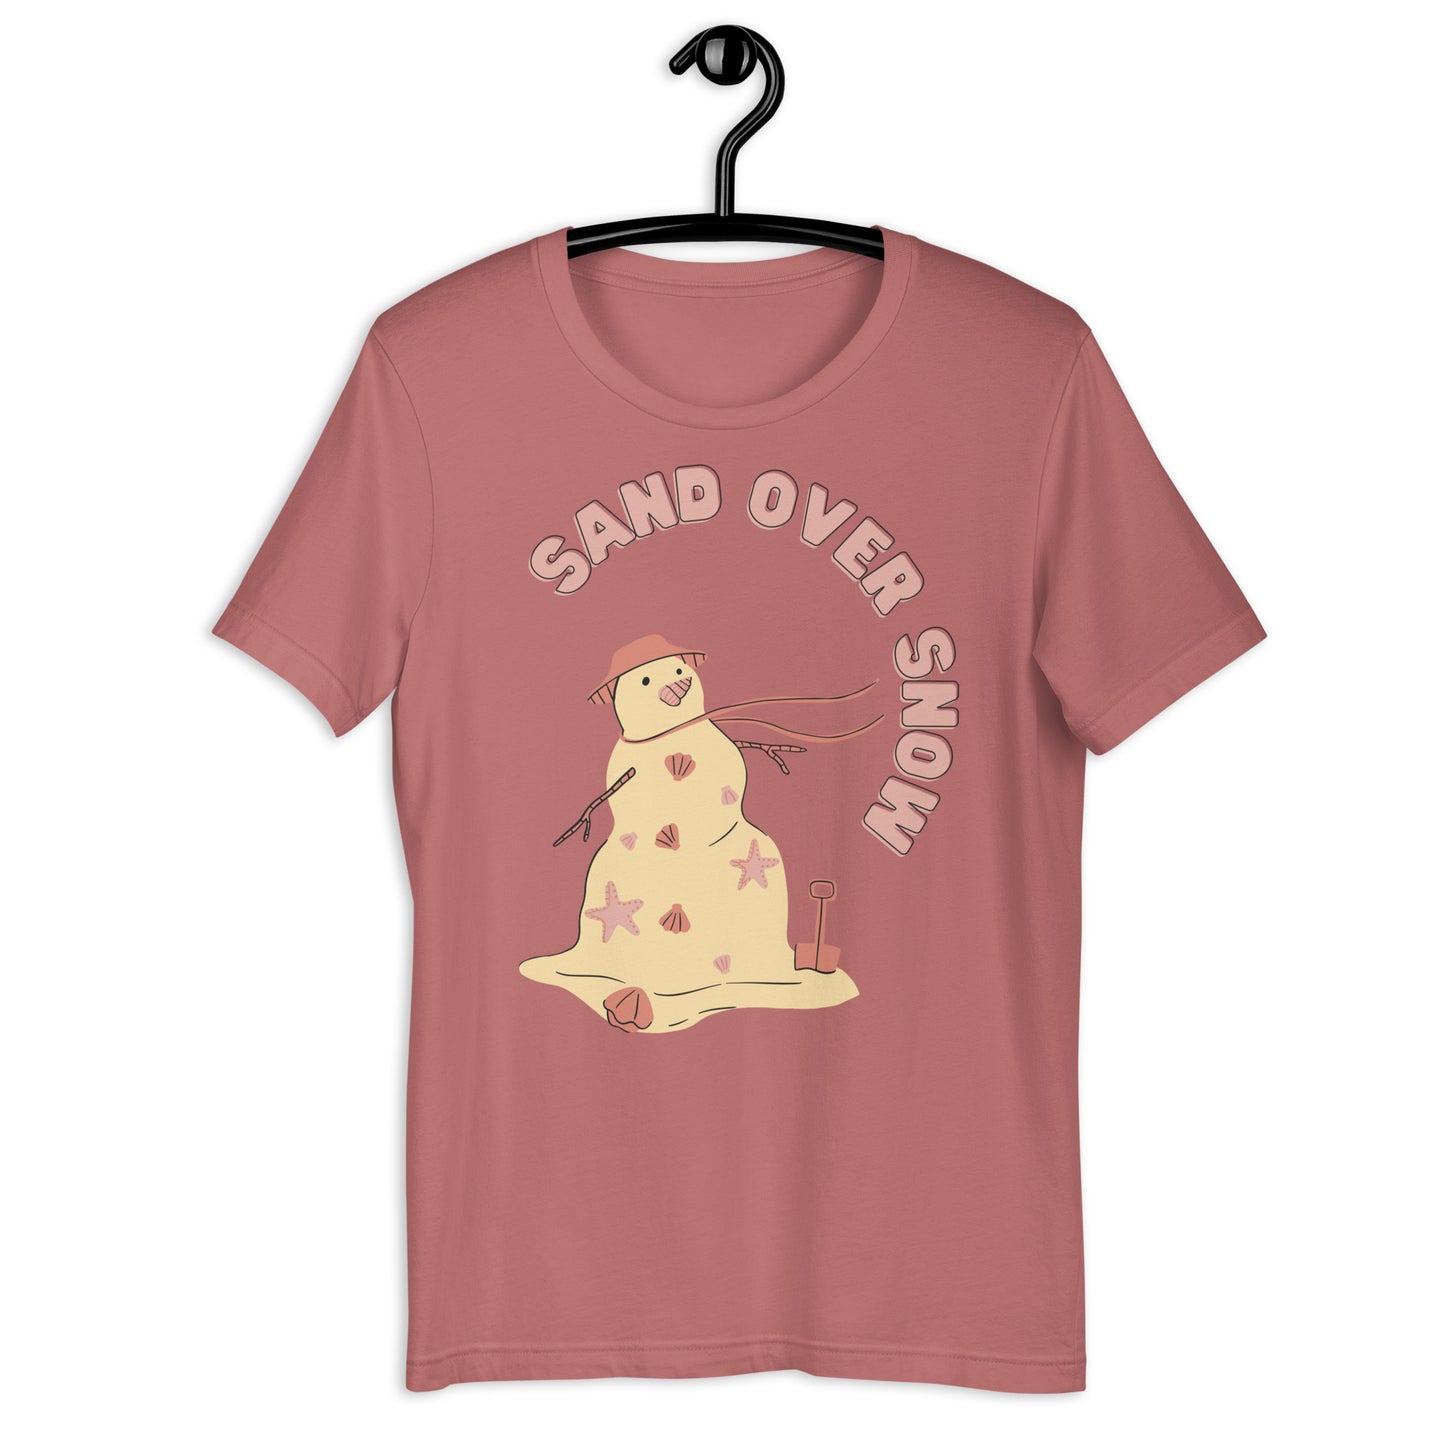 Sand Over Snow | Unisex T-shirt